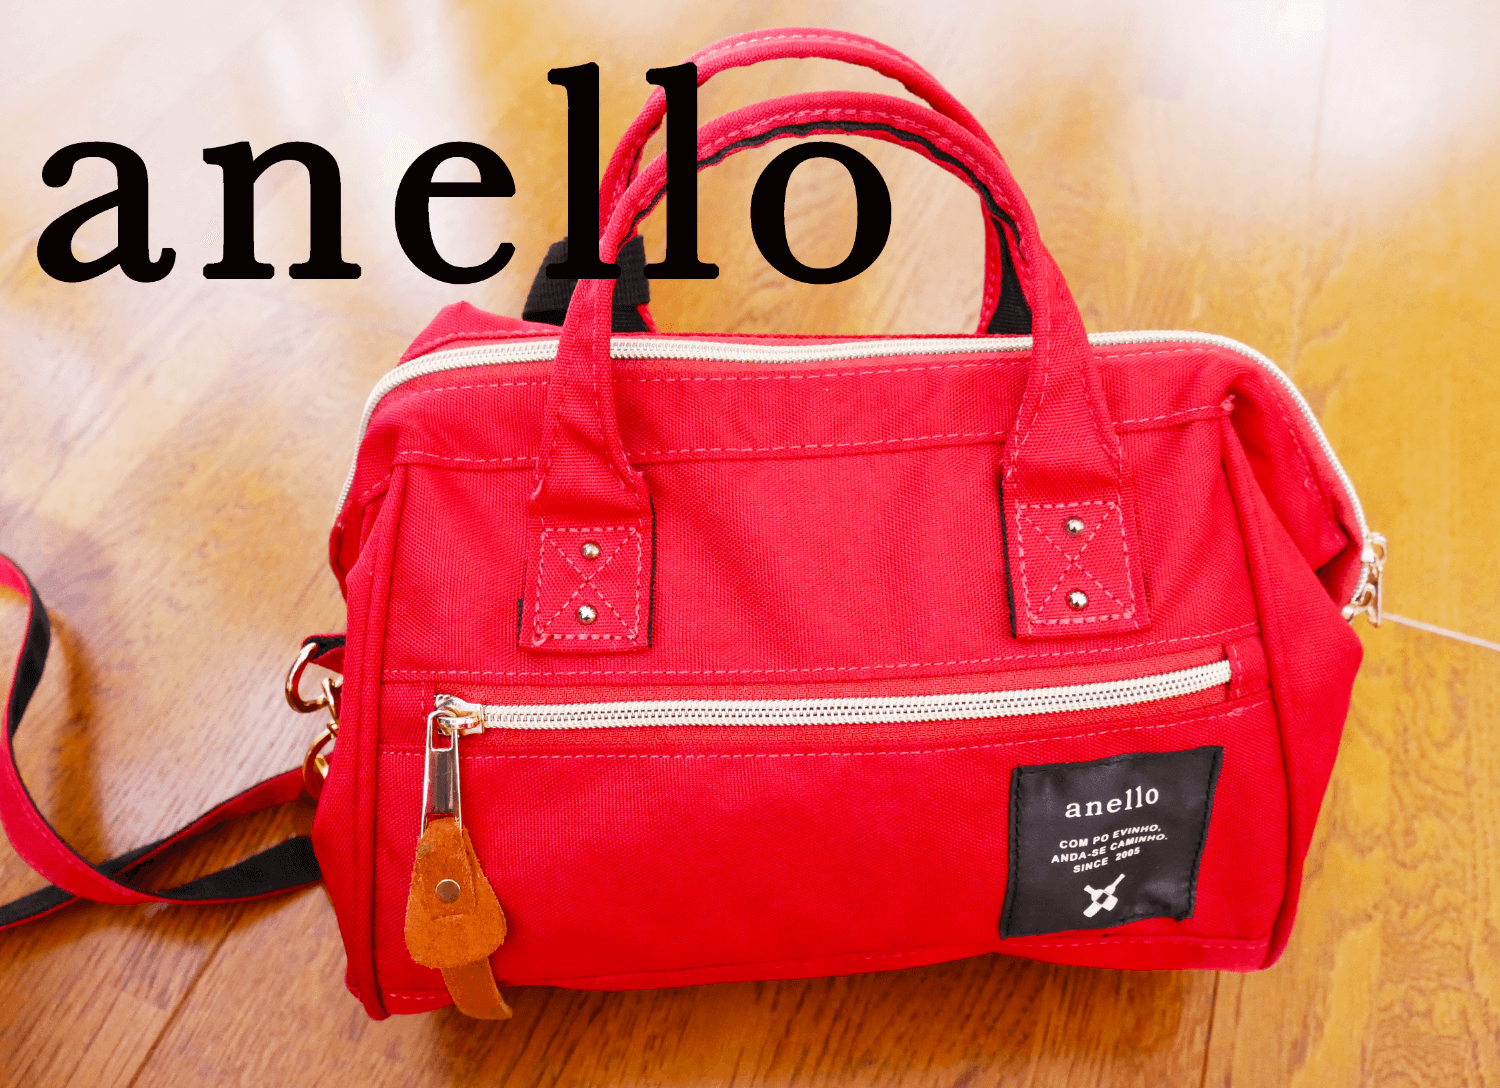 anello（アネロ）のショルダーバッグがコンパクトで可愛くて普段づかいに超便利！